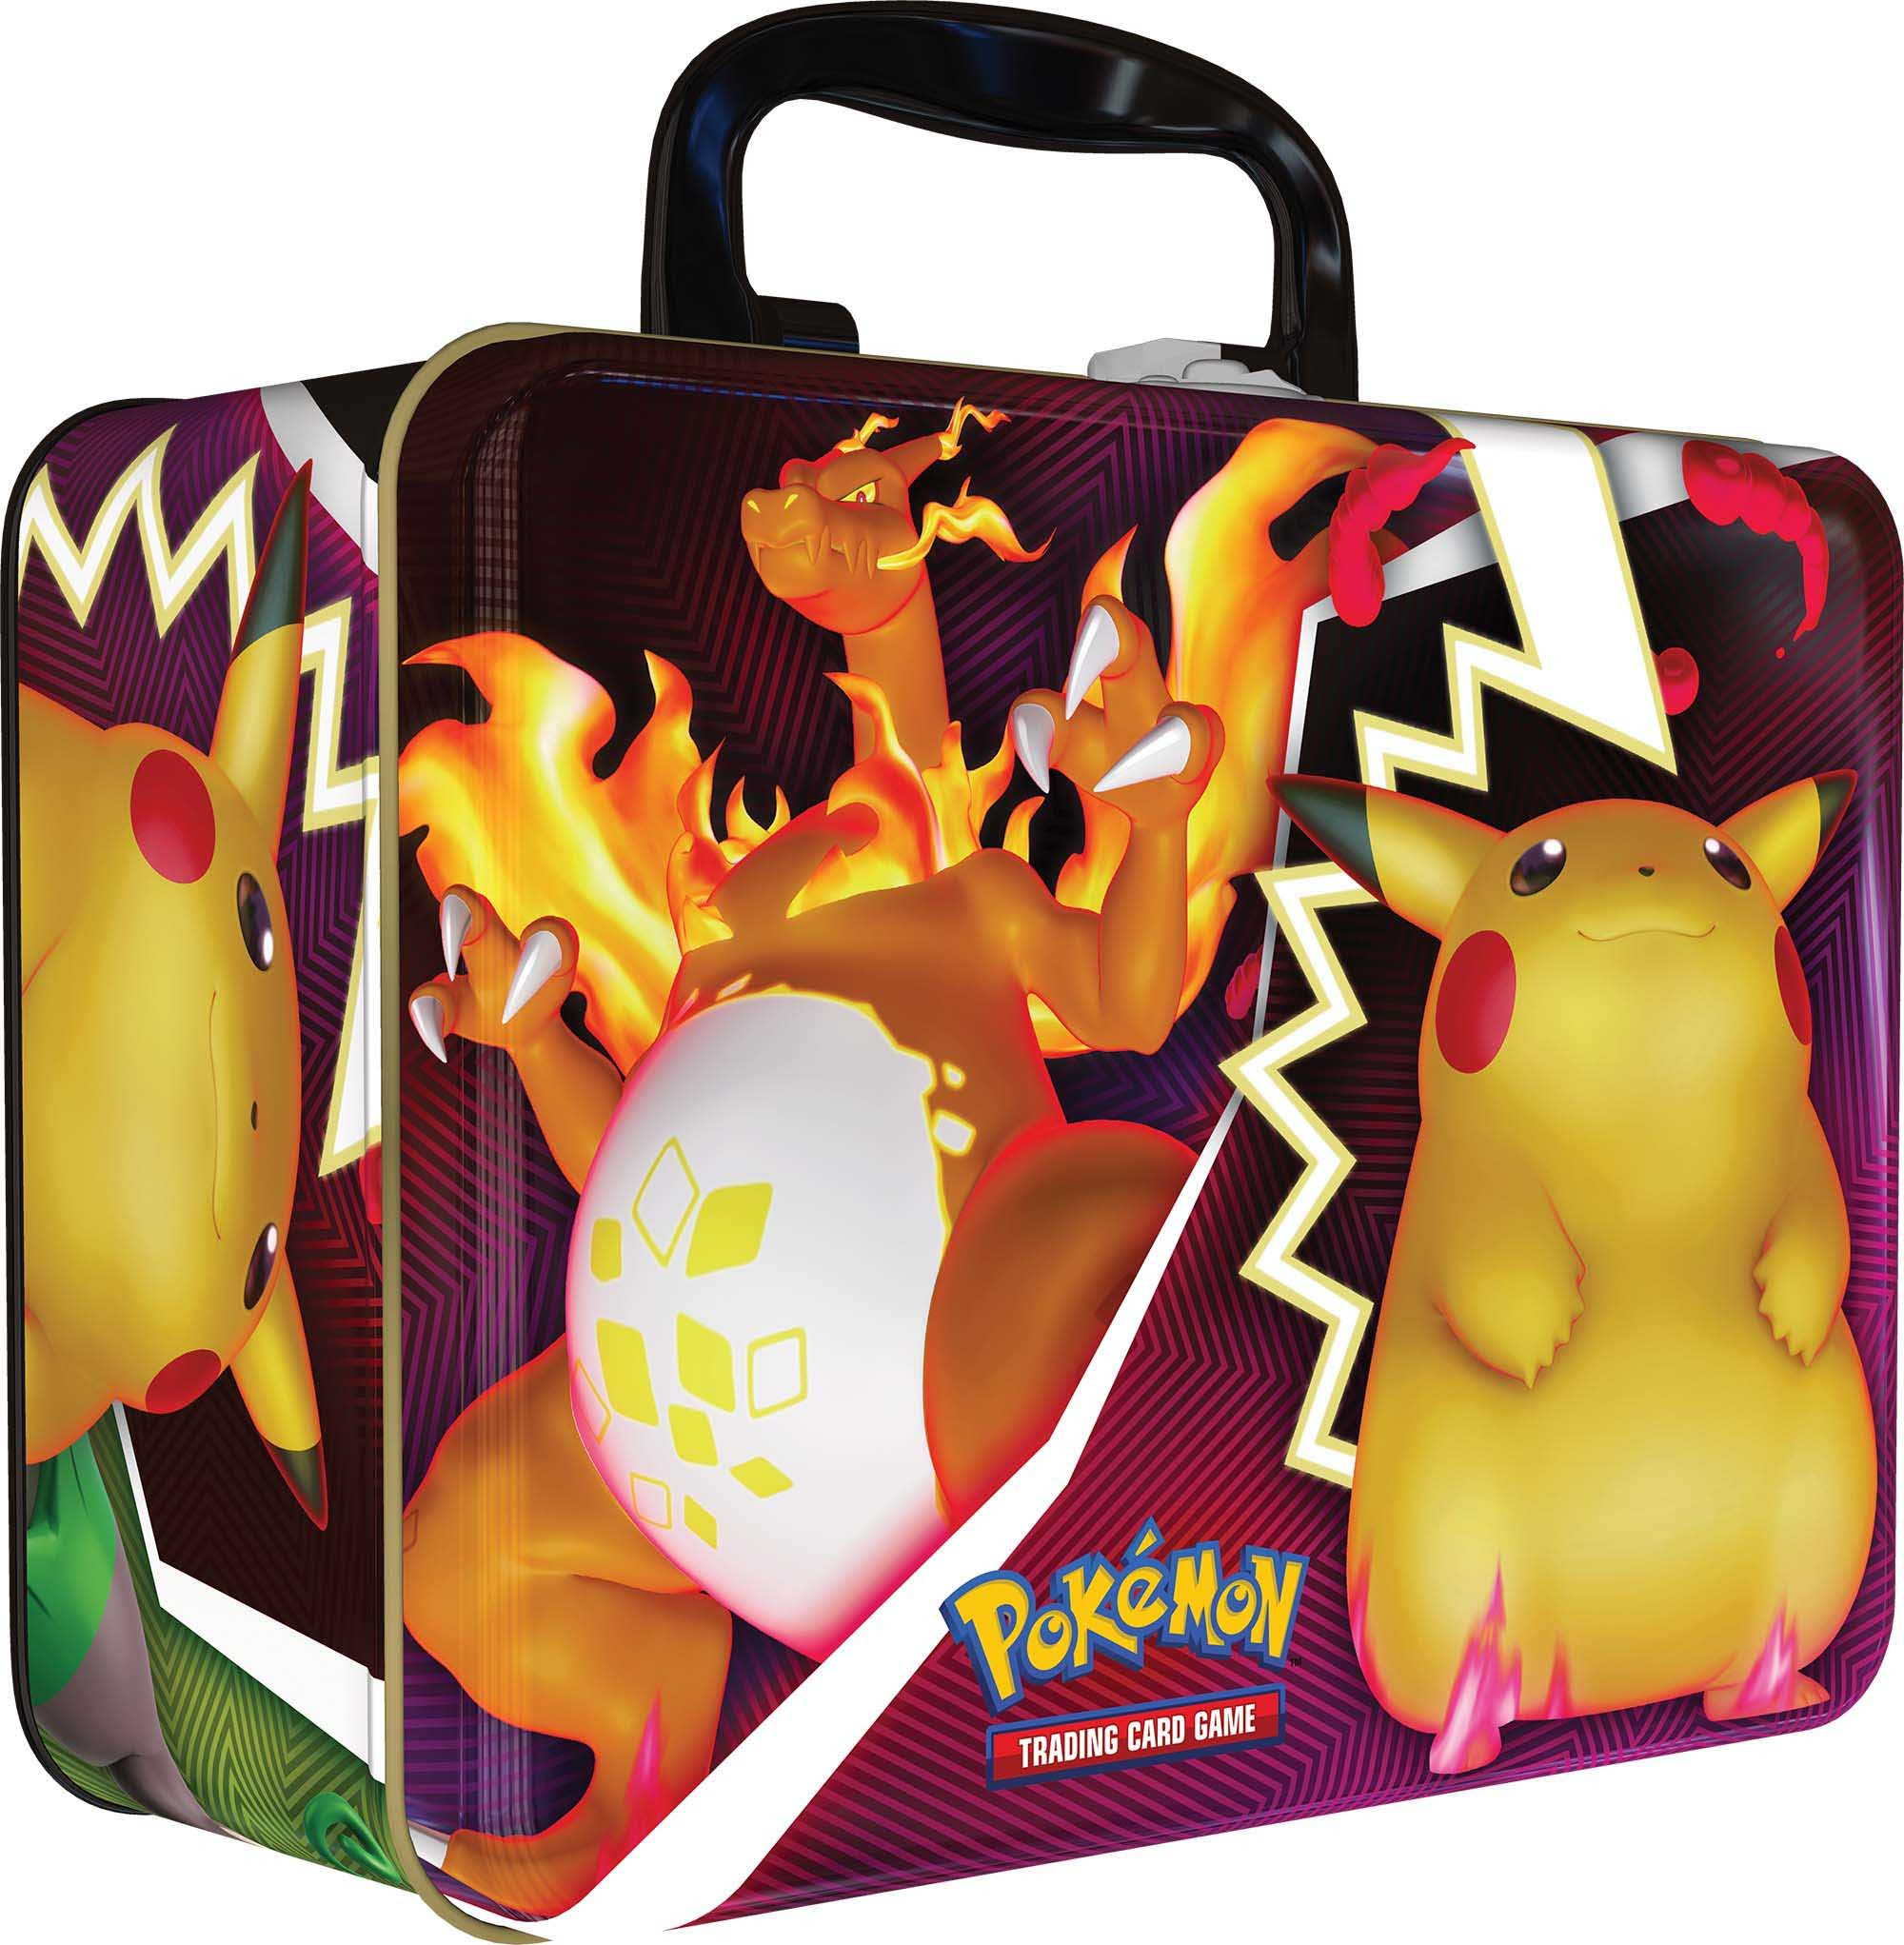 Pokémon Charizard & Pikachu Treasure Chest